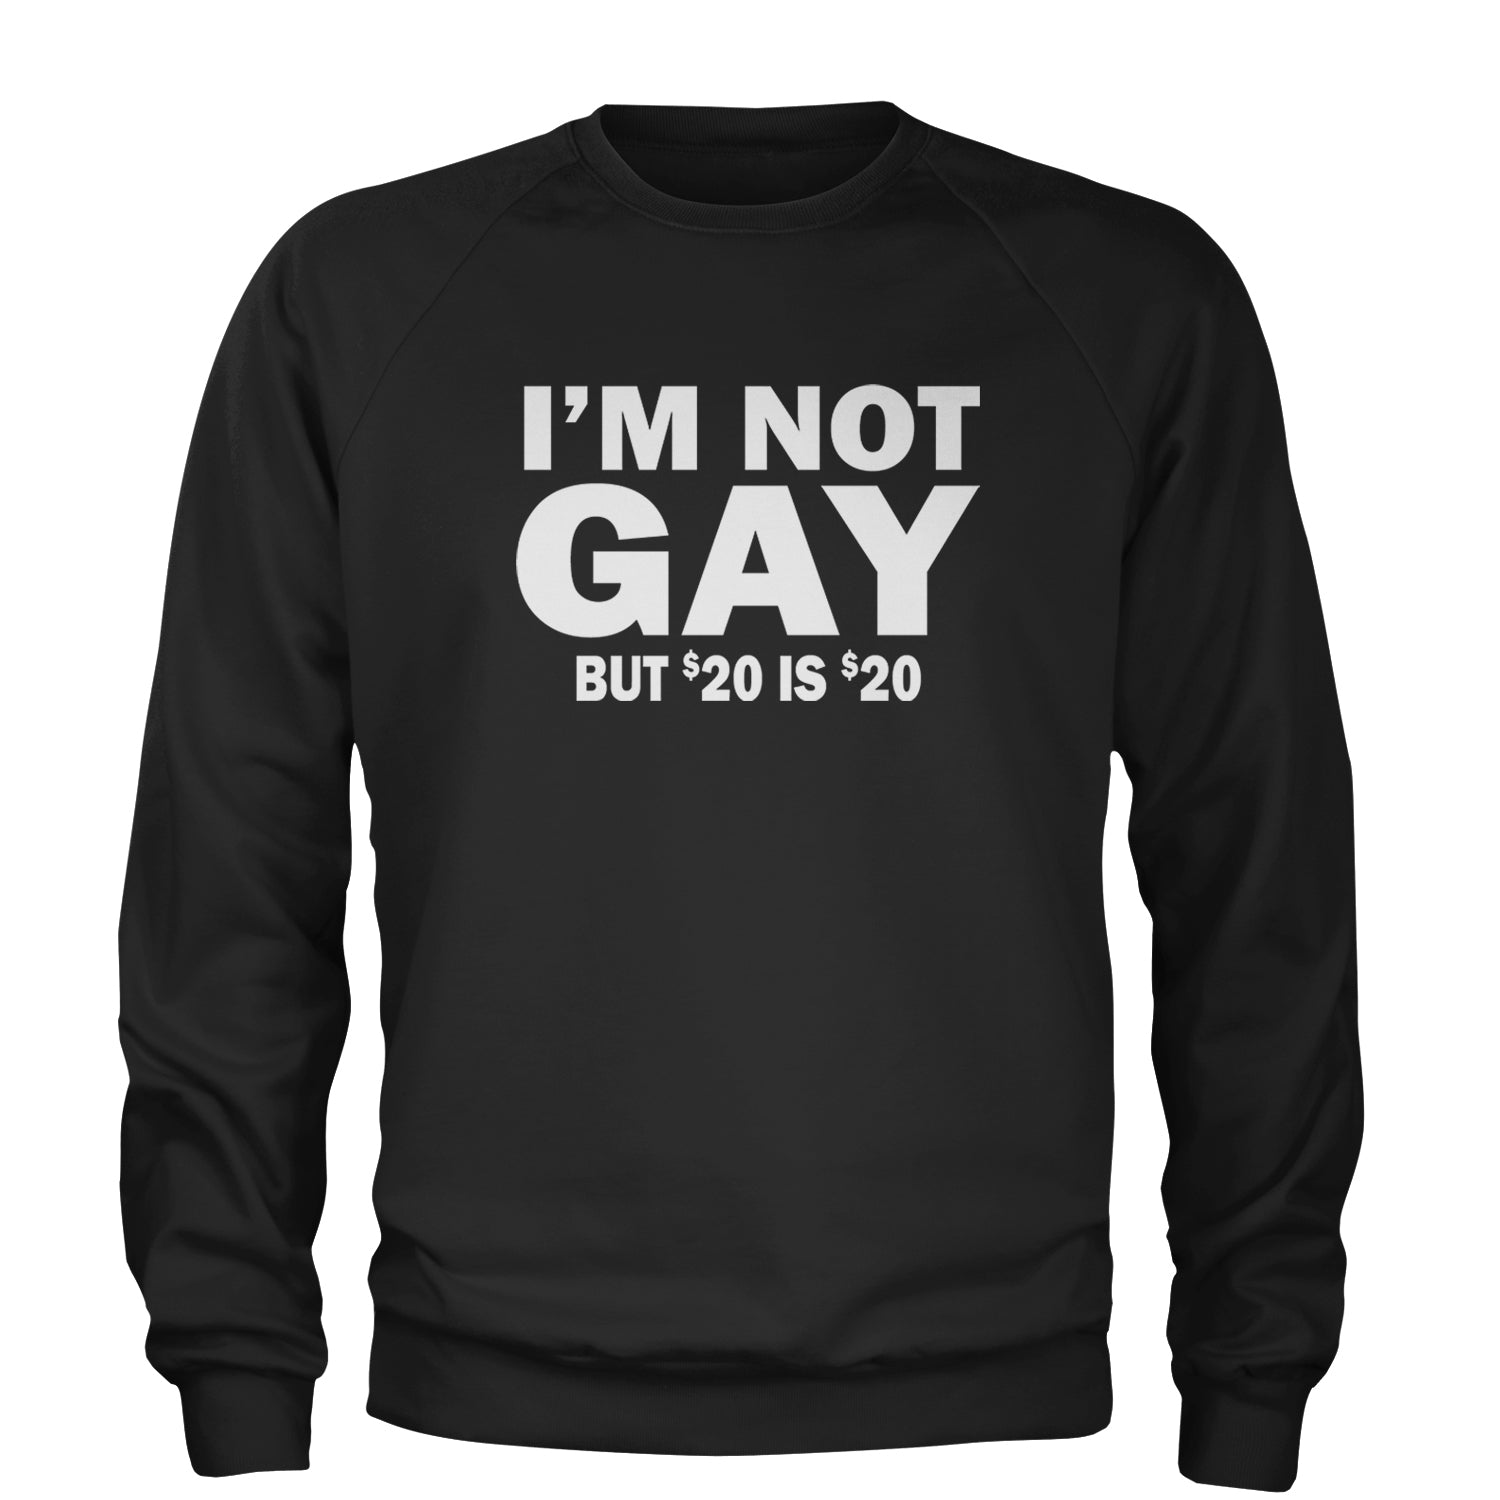 I'm Not Gay, But $20 Bucks is $20 Bucks Adult Crewneck Sweatshirt